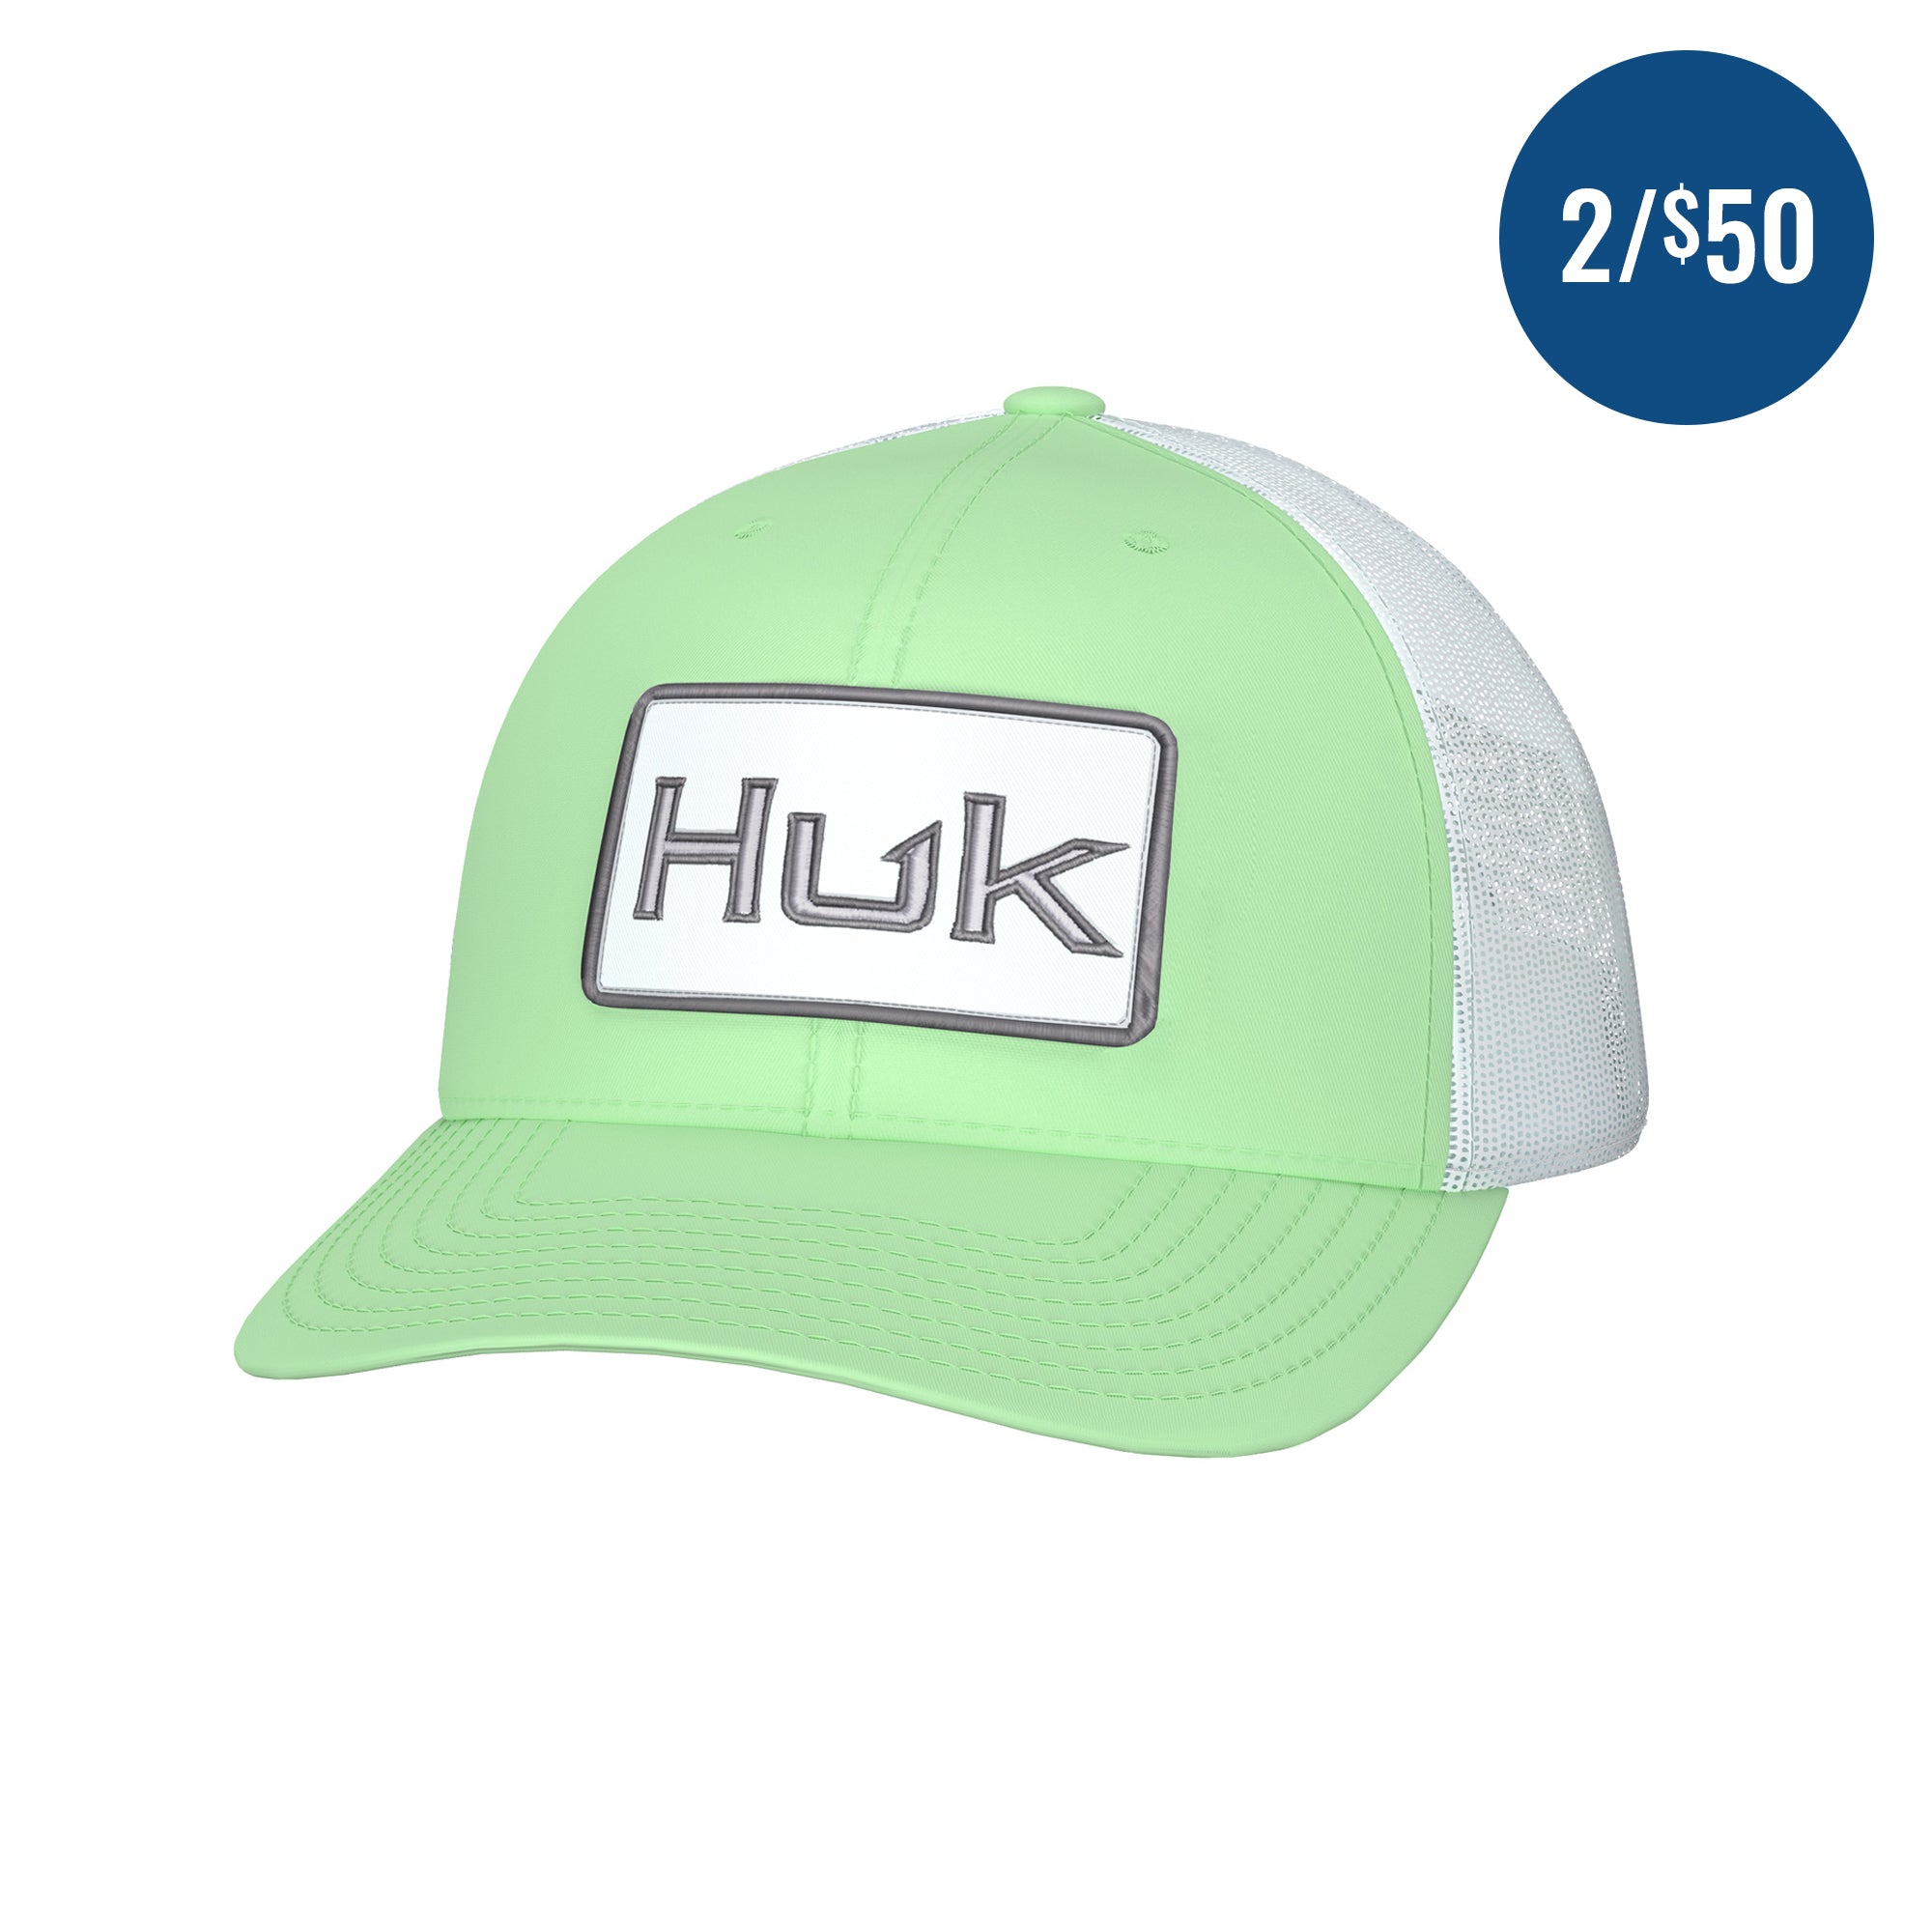 Huk Men's Aqua Dye Performance Bucket Hat - Moss - 1